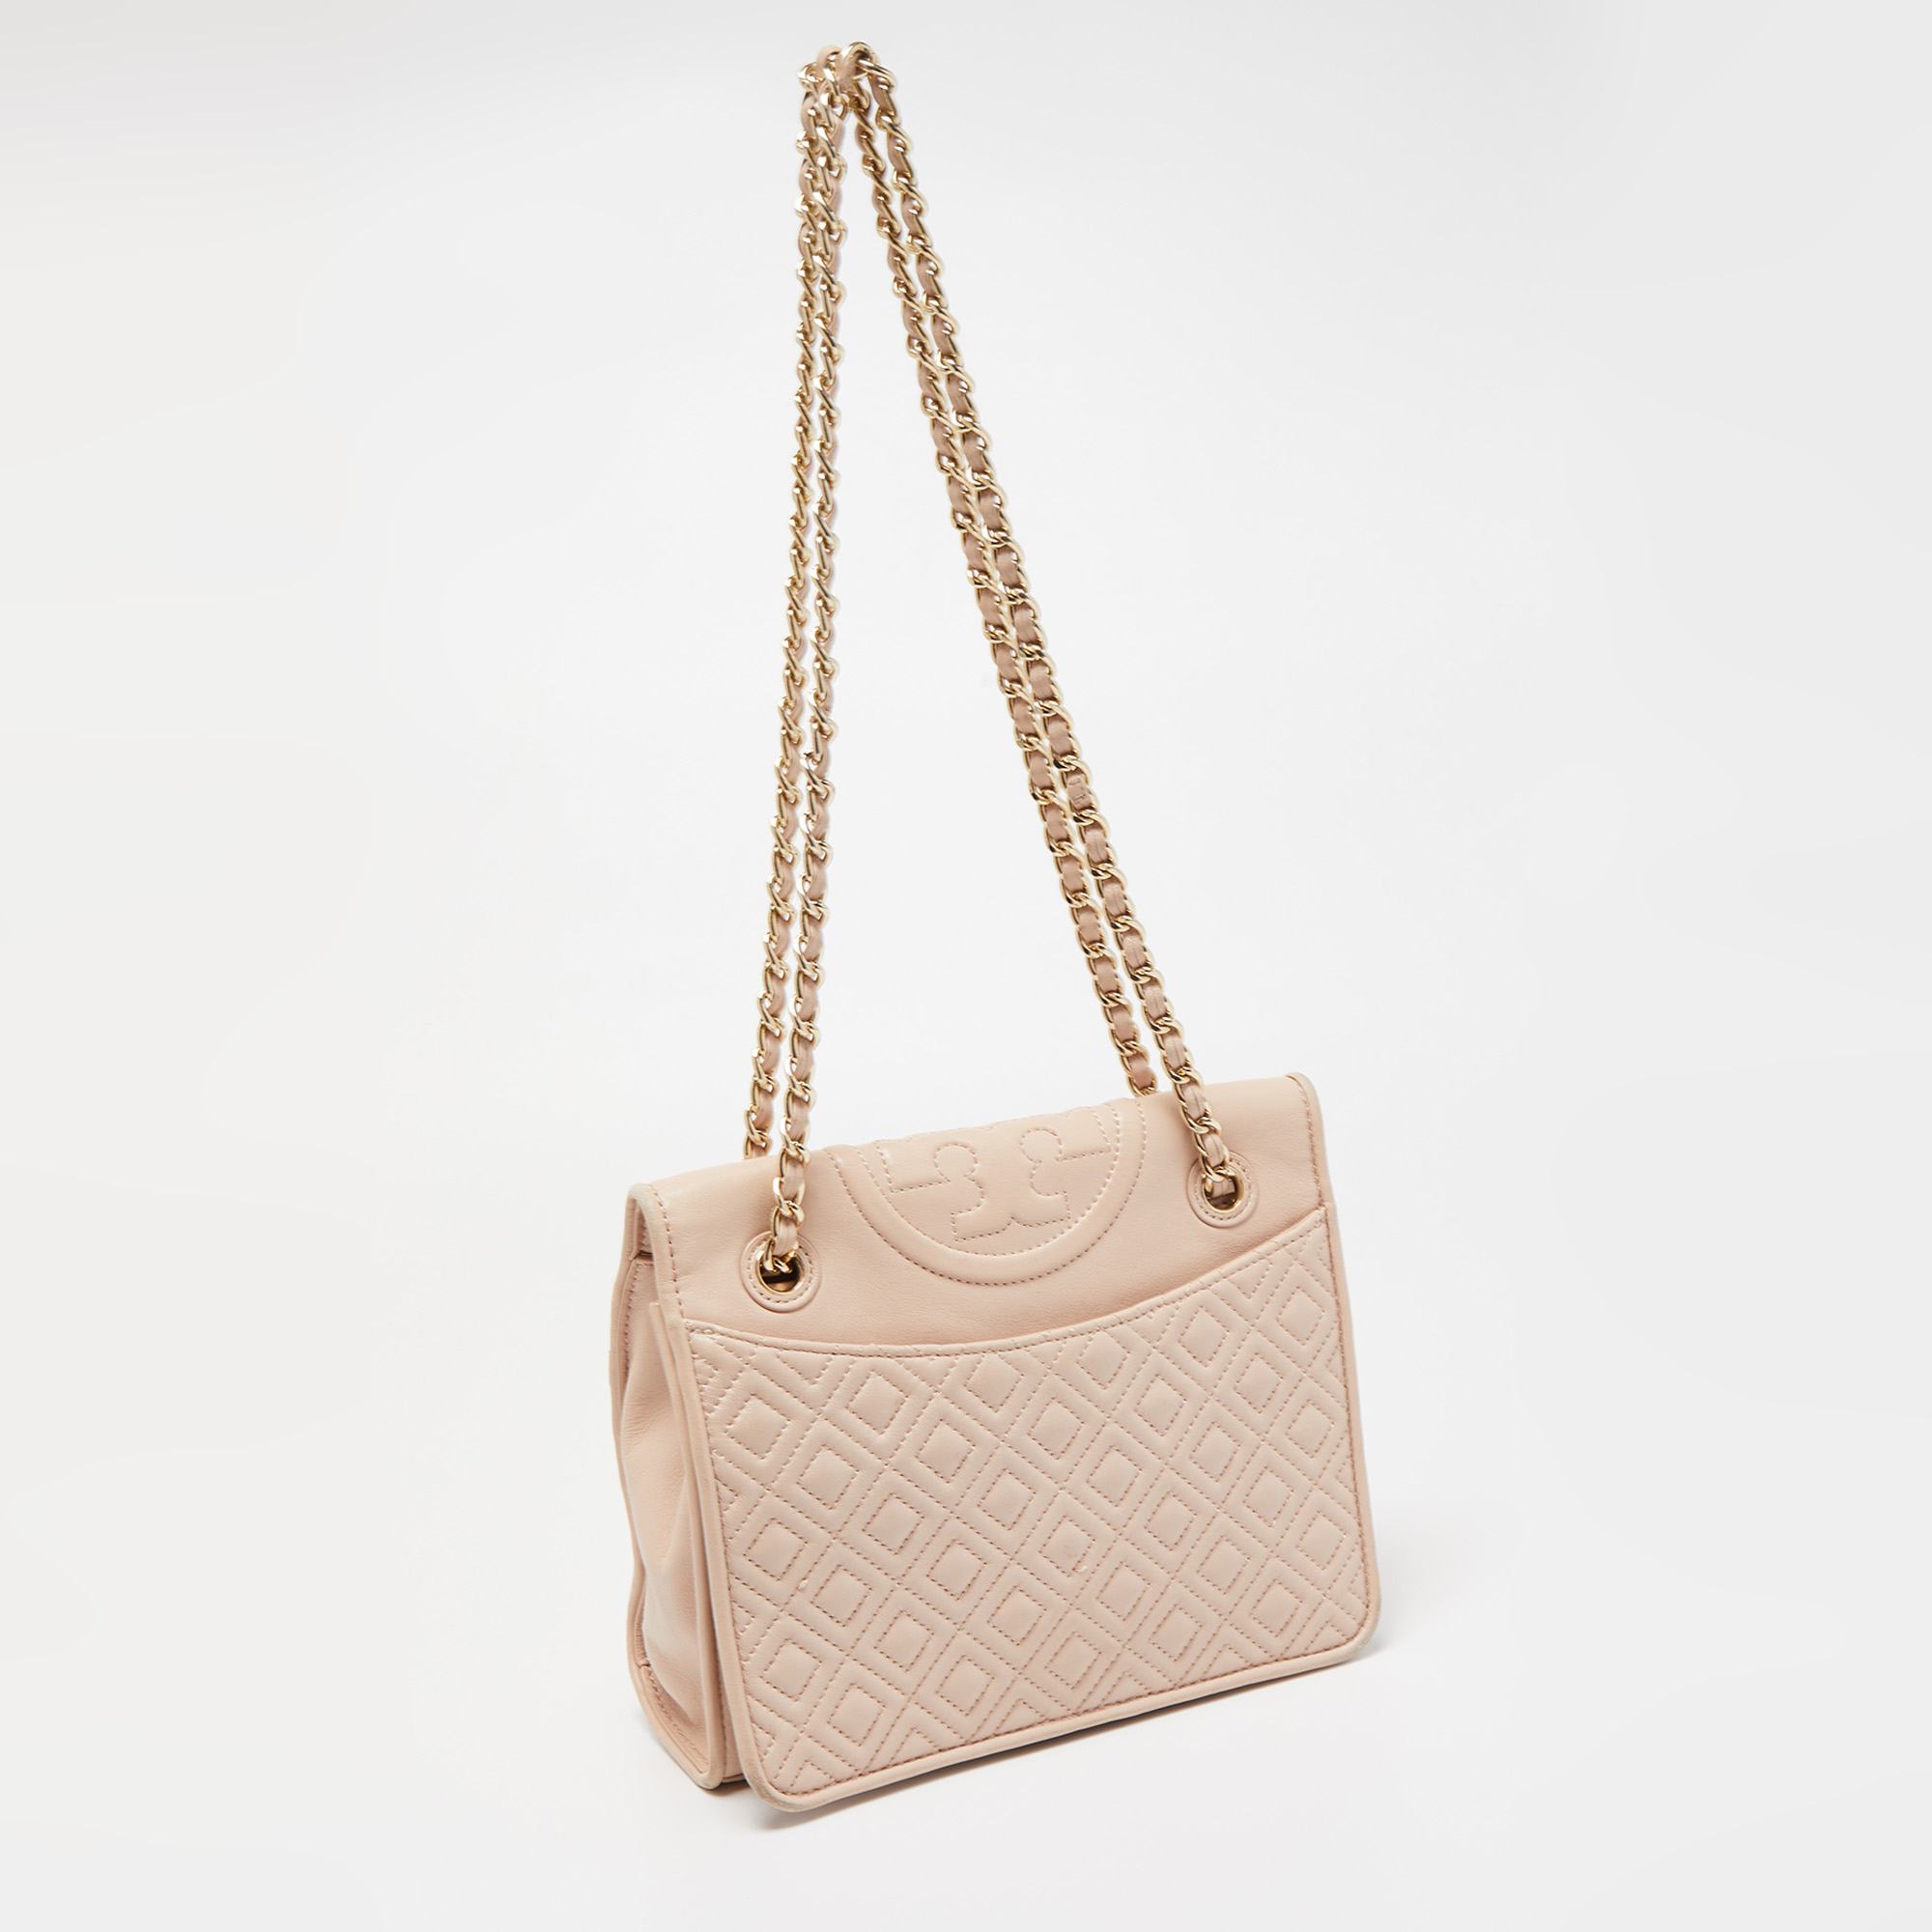 Tory Burch Light Pink Leather Medium Fleming Shoulder Bag